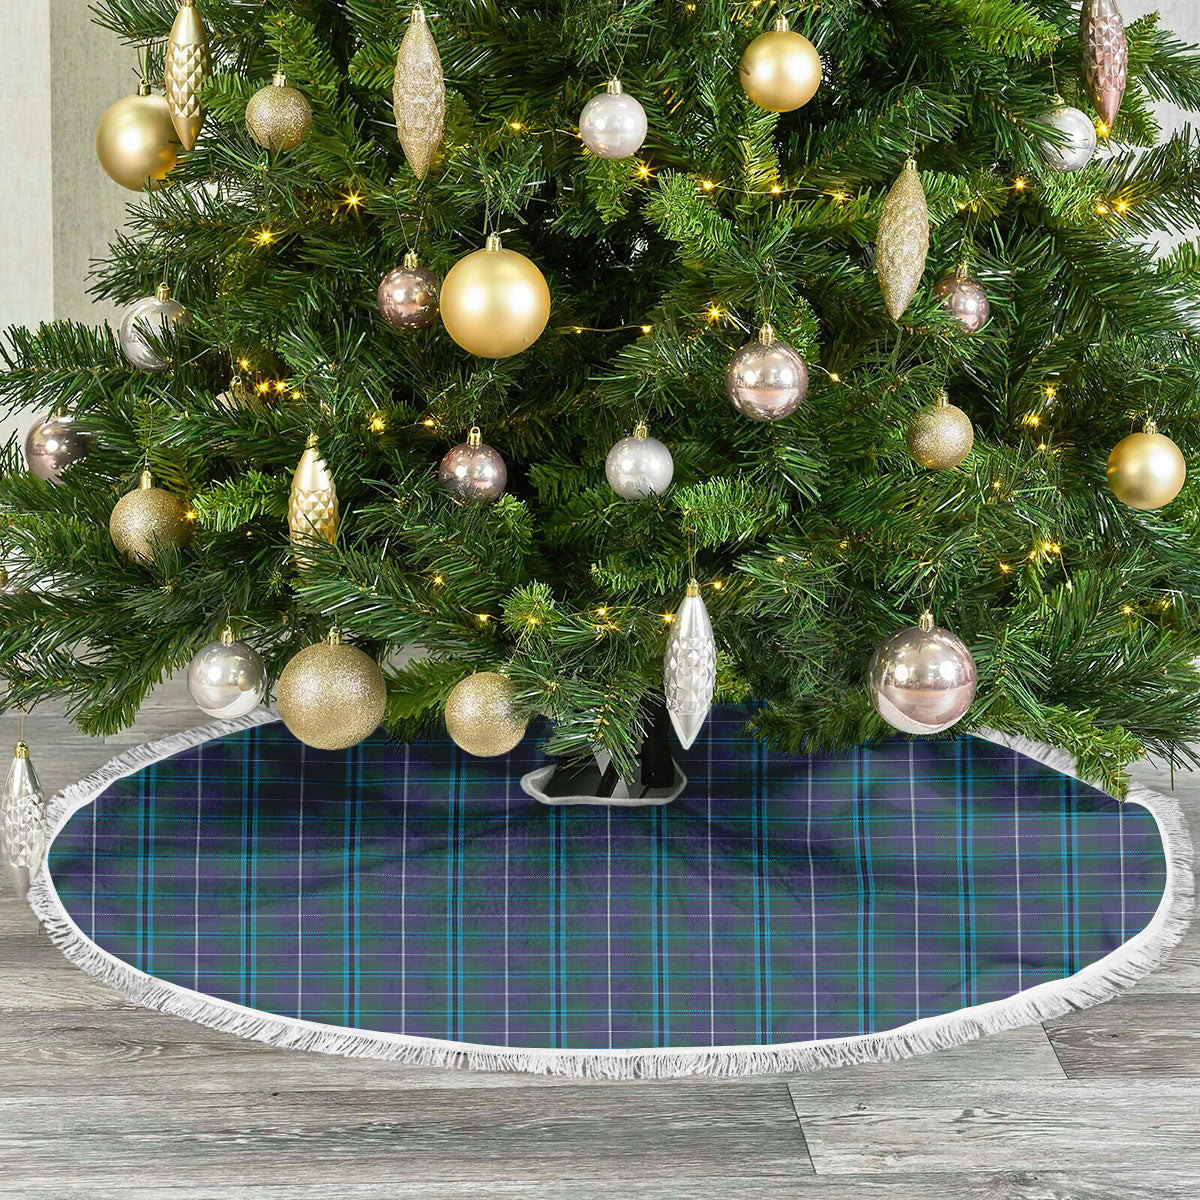 Sandilands Tartan Christmas Tree Skirt